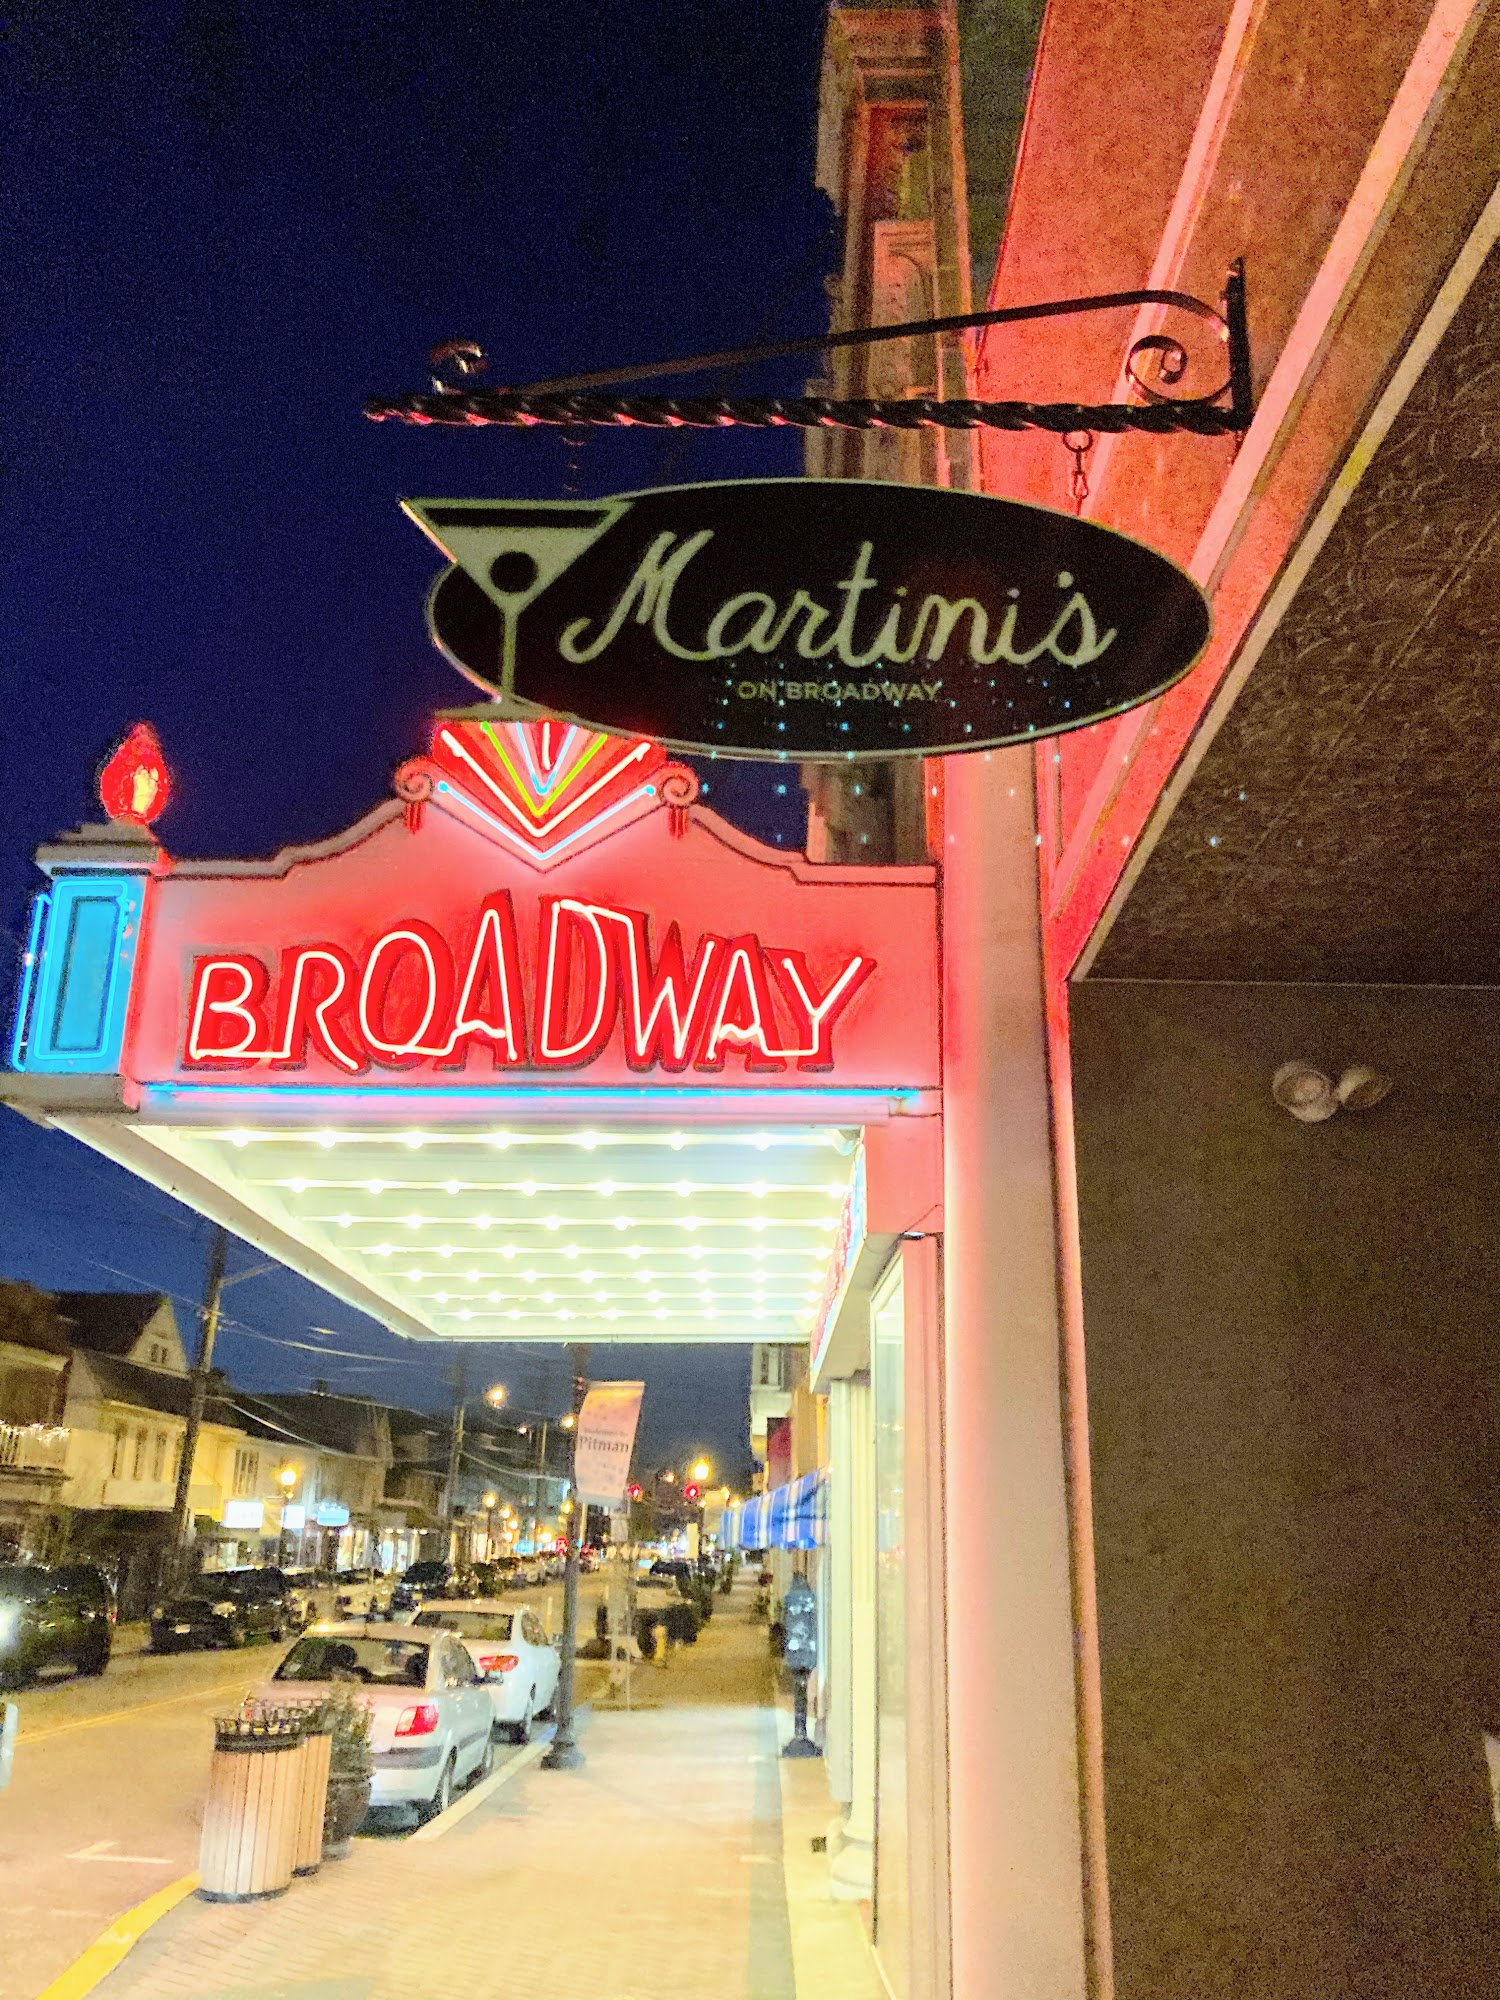 Martini’s on Broadway